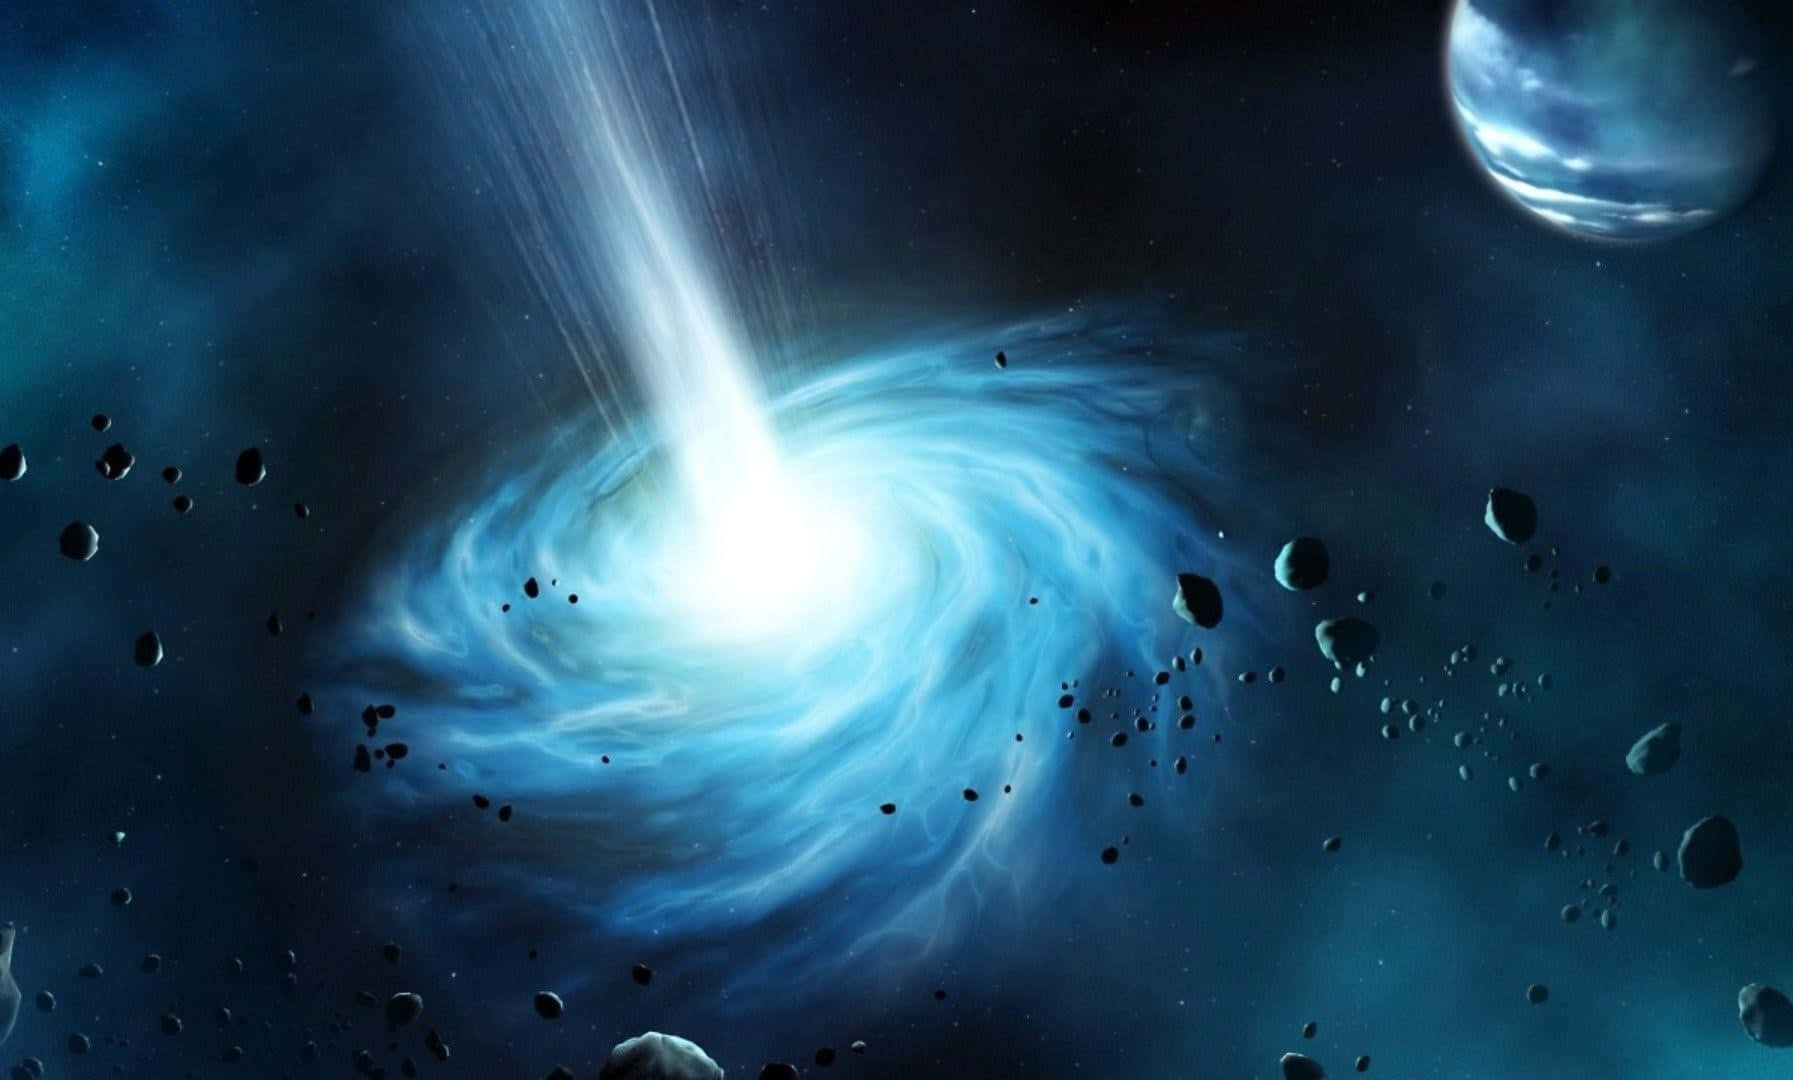 Stunning Spiral Galaxy in Deep Space Wallpaper